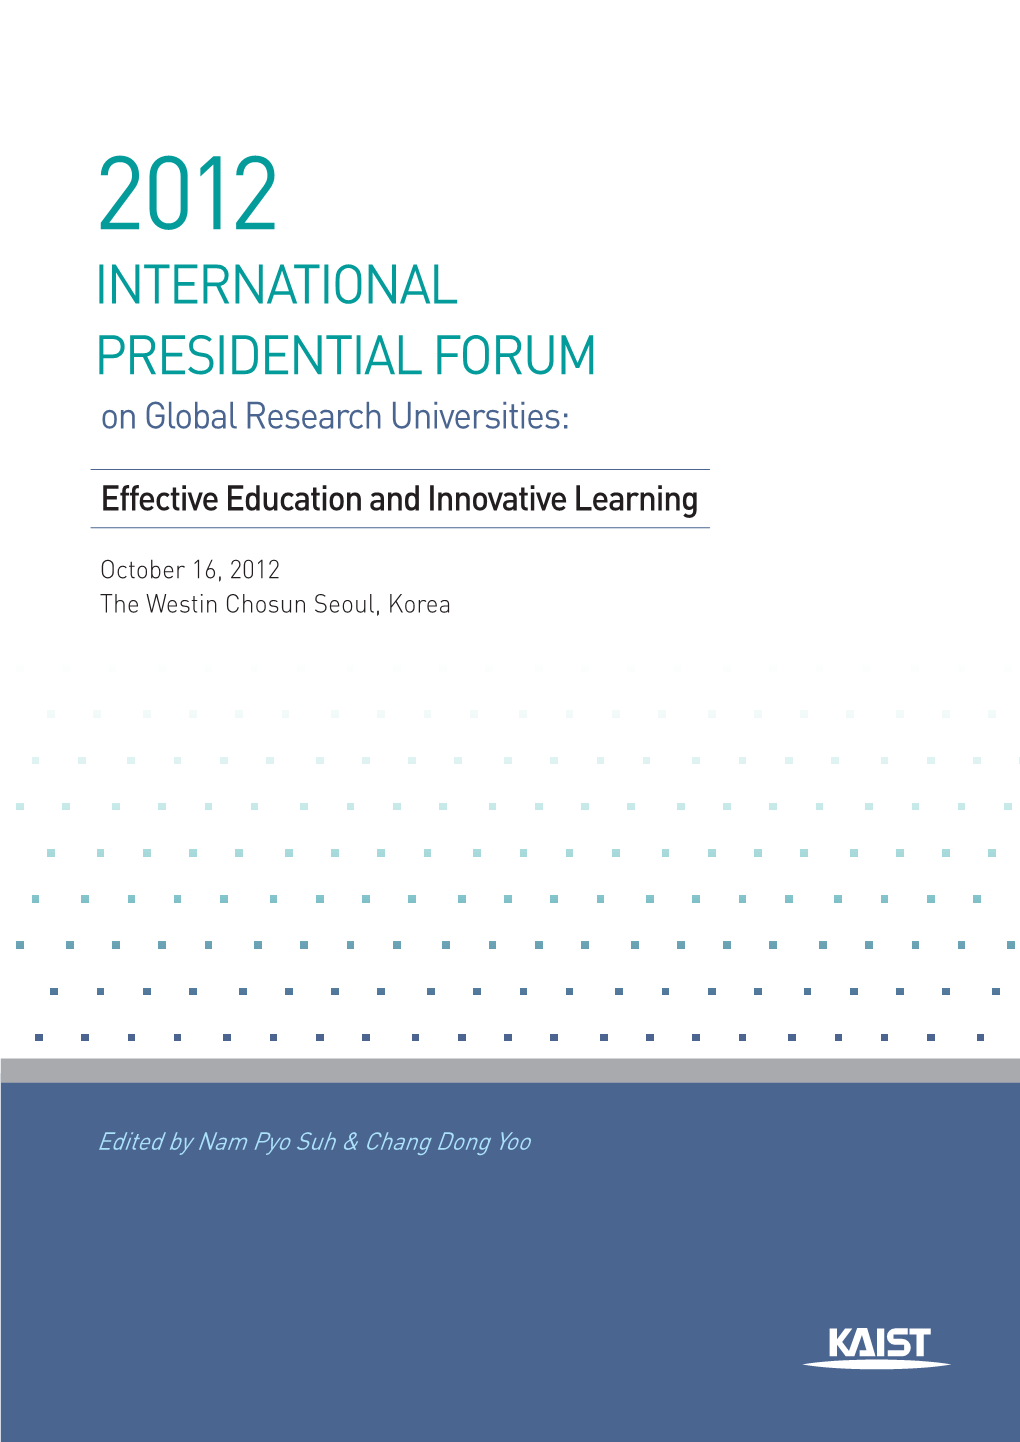 INTERNATIONAL PRESIDENTIAL FORUM on Global Research Universities